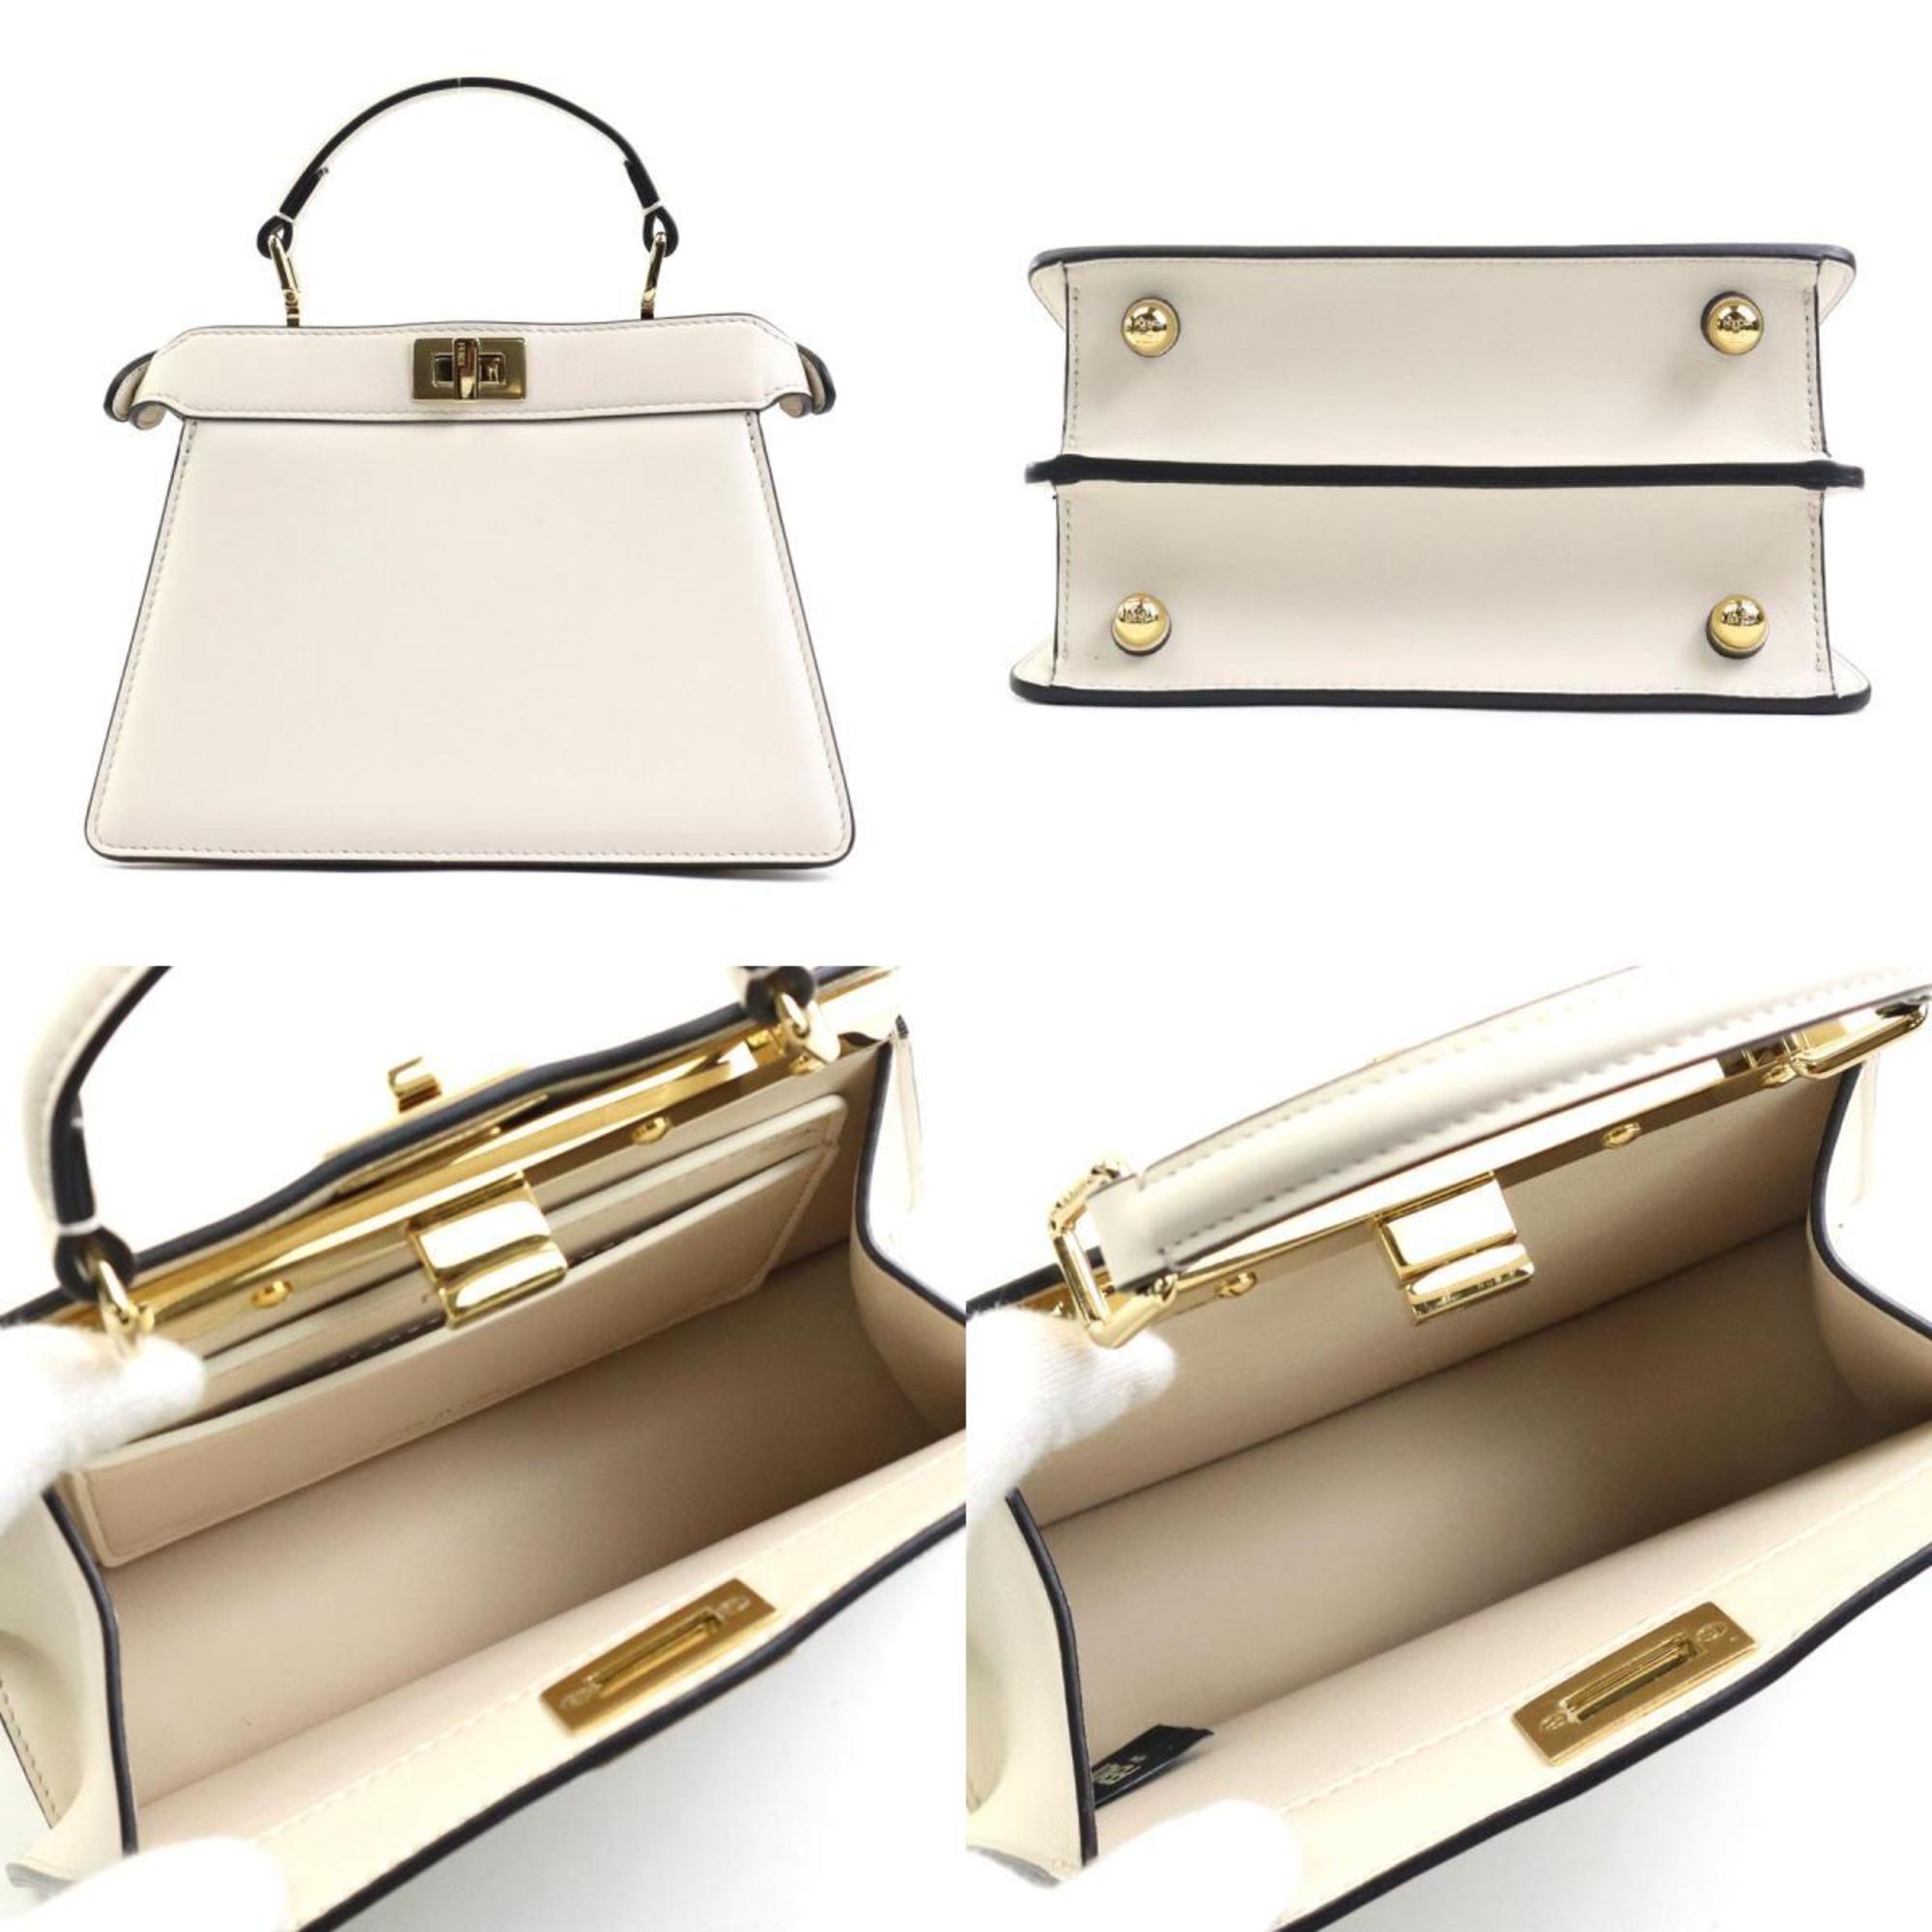 FENDI Handbag Crossbody Shoulder Bag Floral Embroidery Peekaboo IseeU Petite Leather Light Beige/White Gold Women's 8BN335APZ5